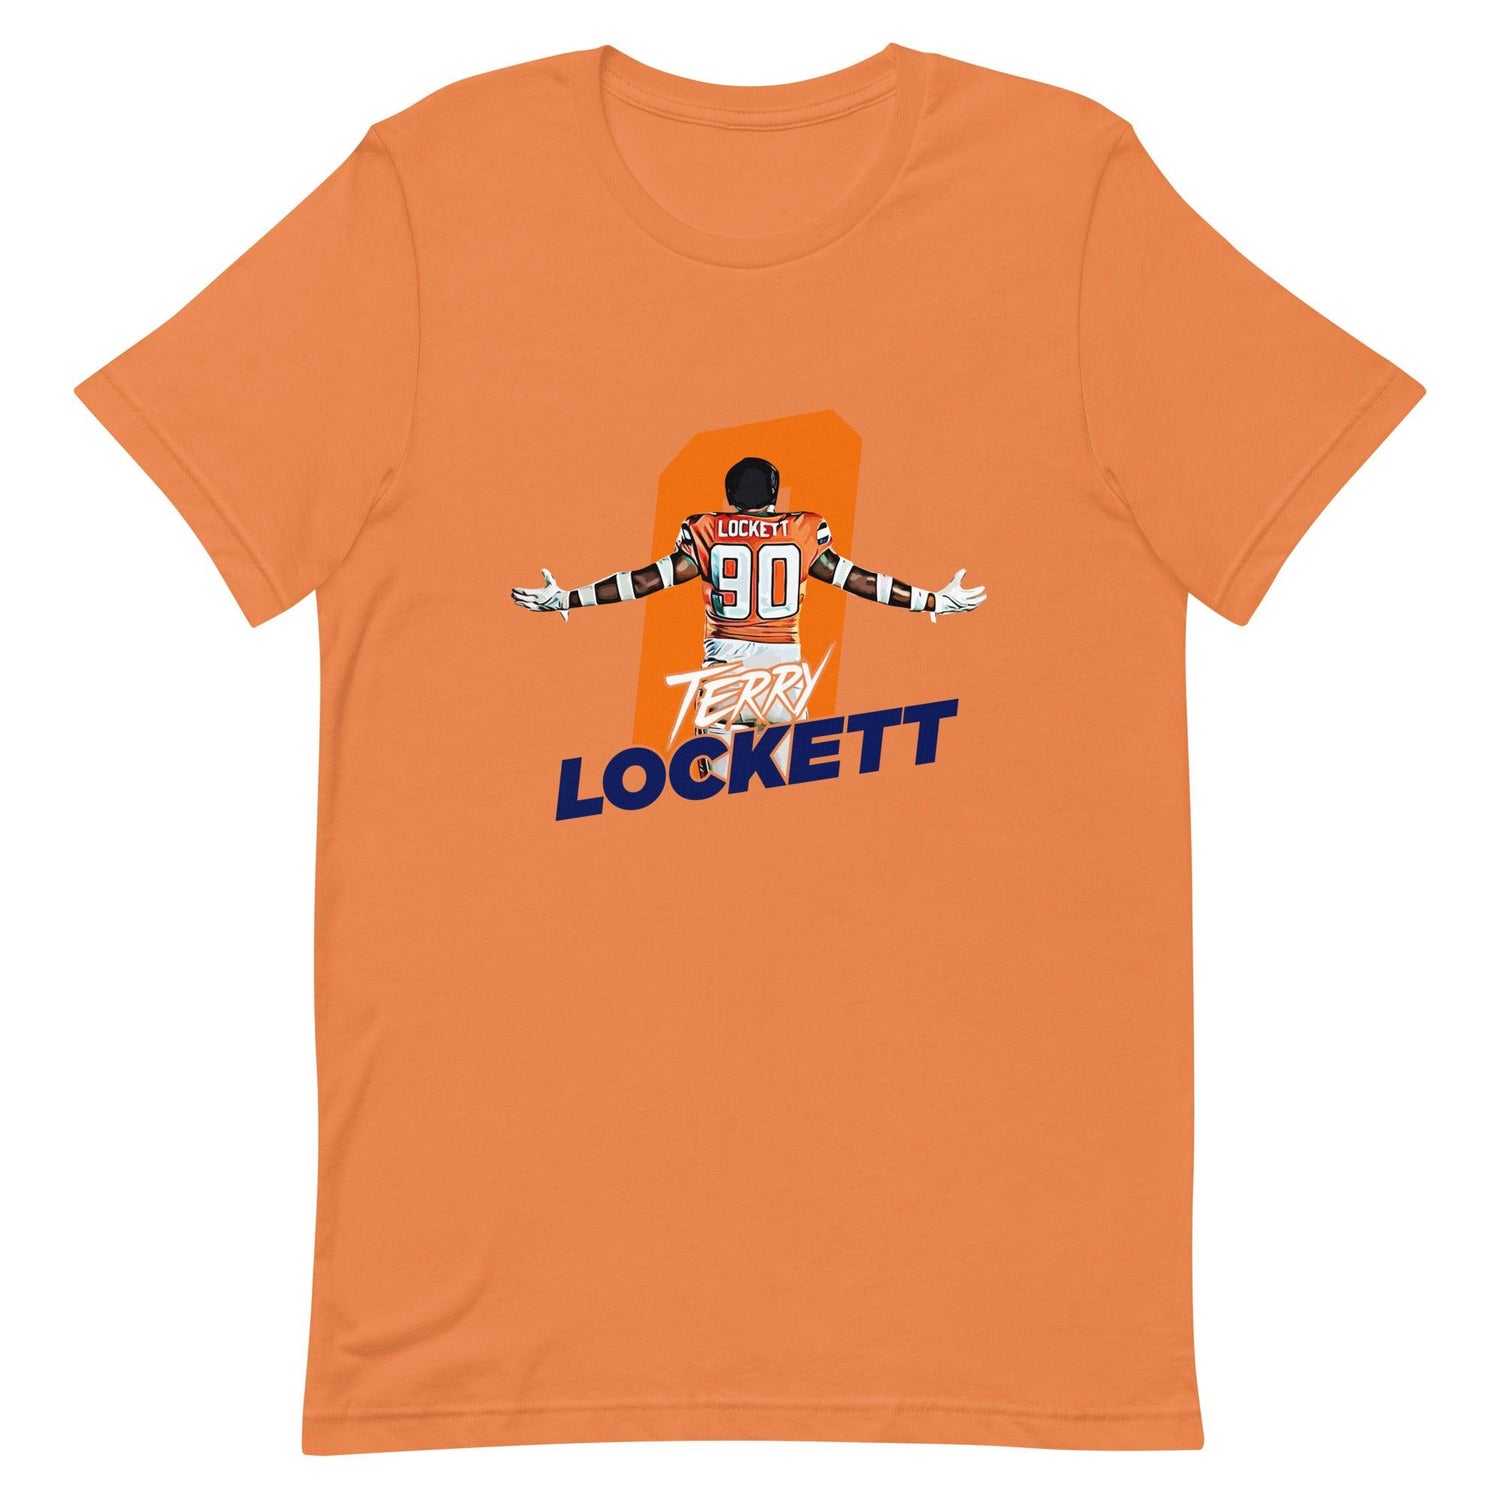 Terry Lockett "Gameday" t-shirt - Fan Arch